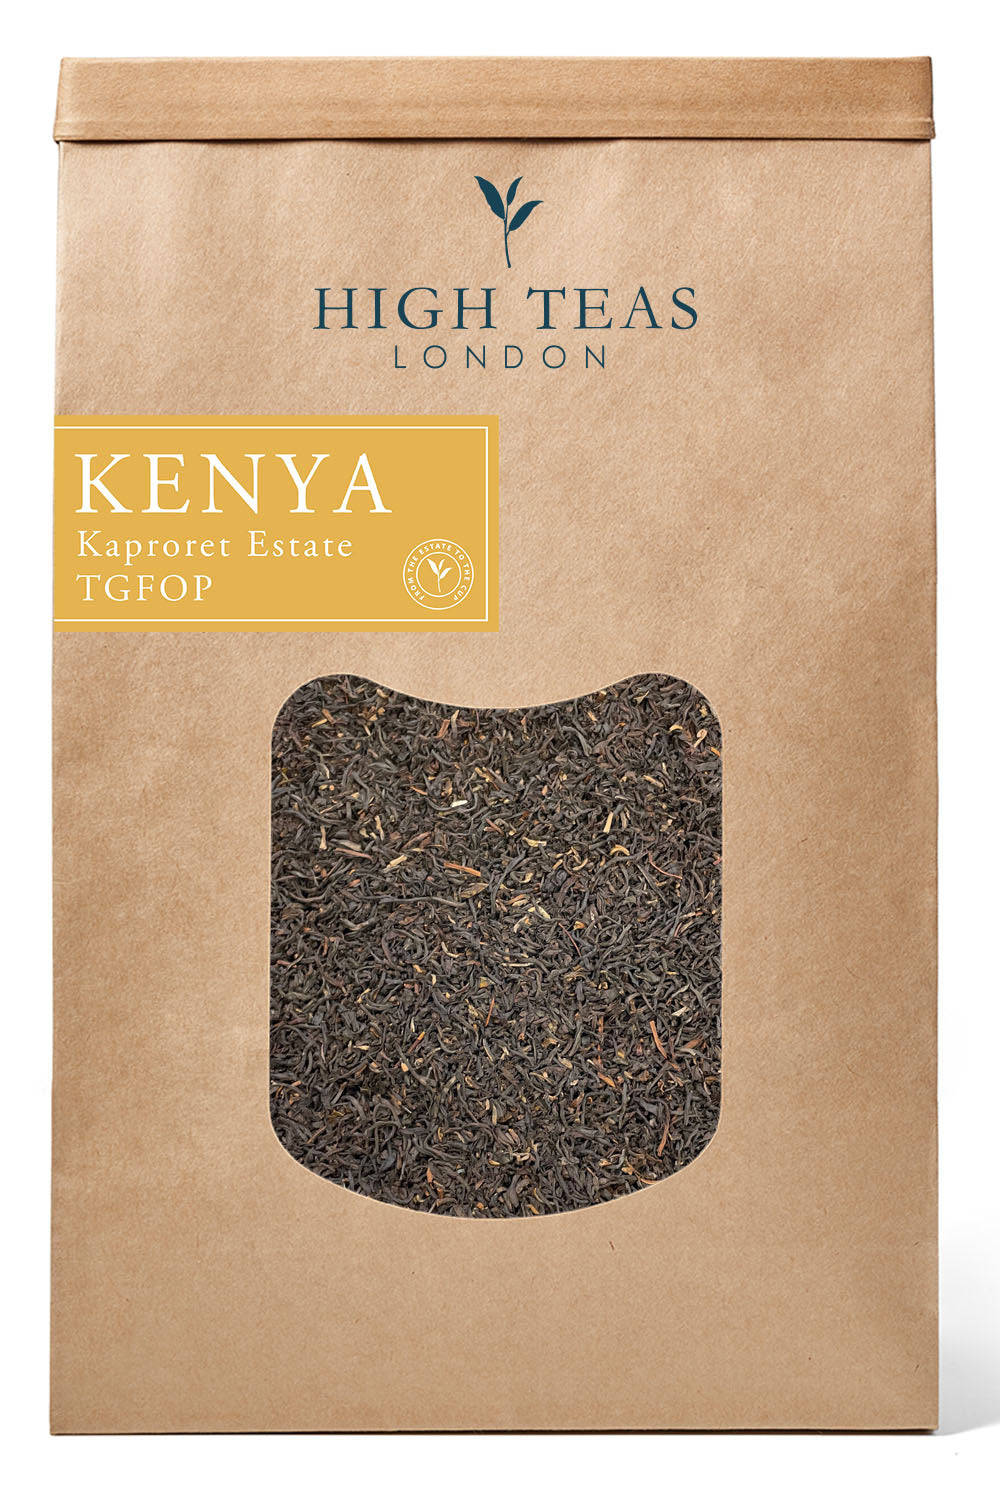 Kenya Kaproret Estate TGFOP-500g-Loose Leaf Tea-High Teas